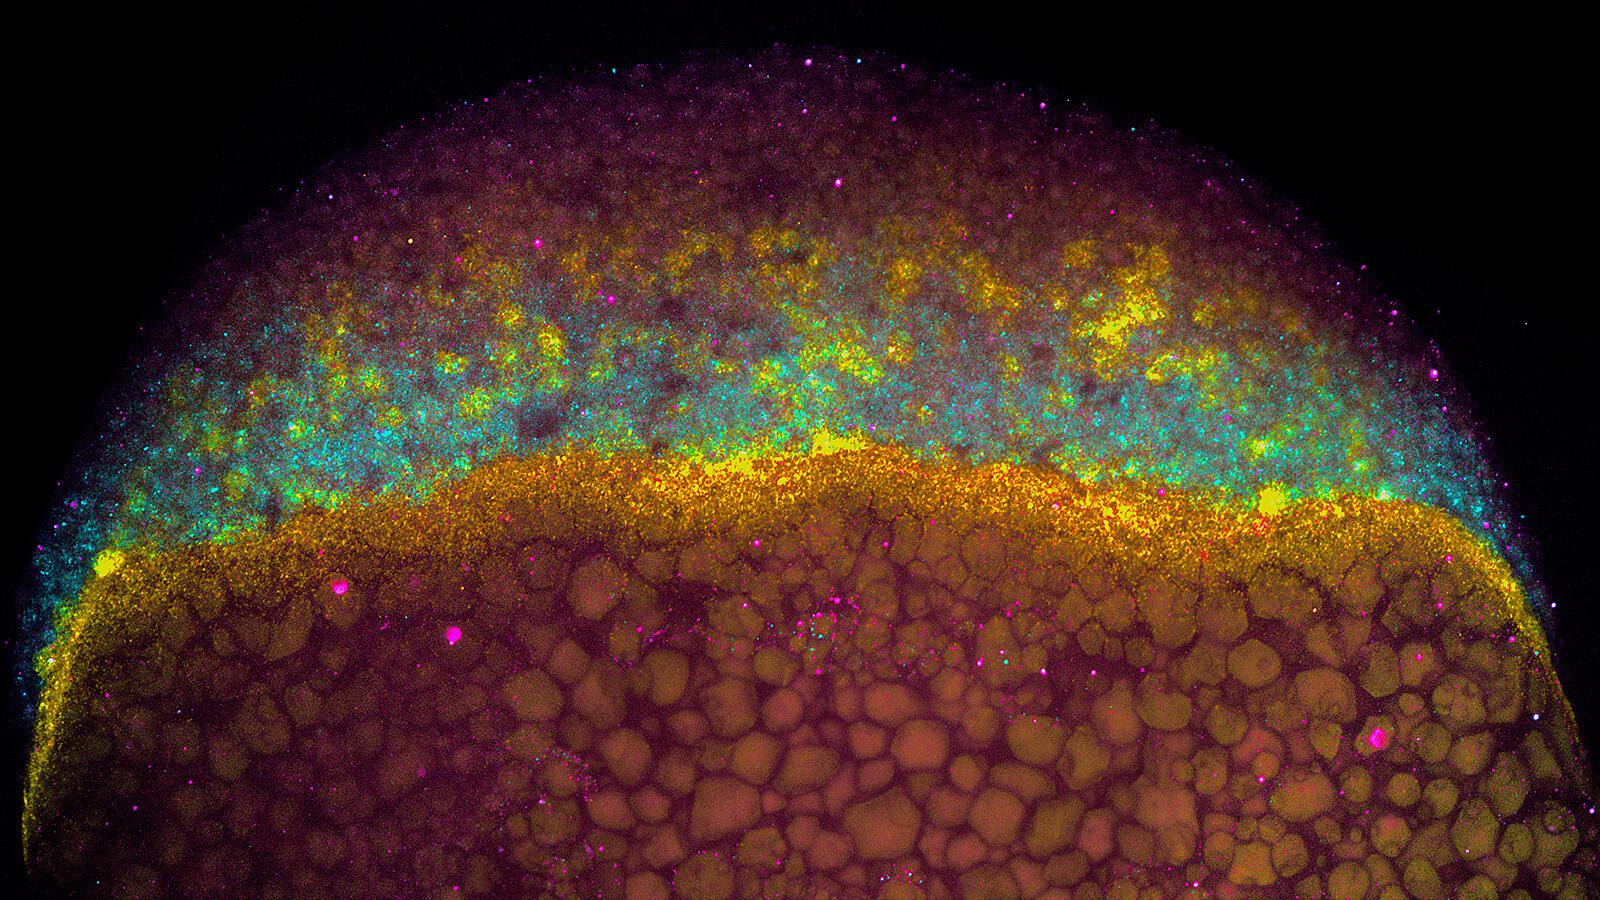 Image of 6 hour old zebrafish embryo showing ectoderm layer, mesoderm layer and endoderm layer.